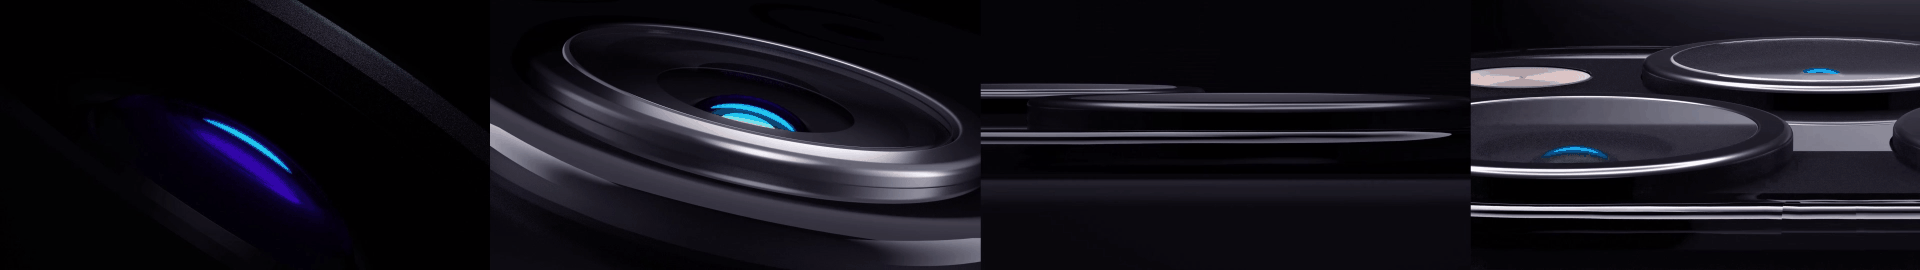 iPHONE13 Pro Max 解锁超能力 - 产品视频